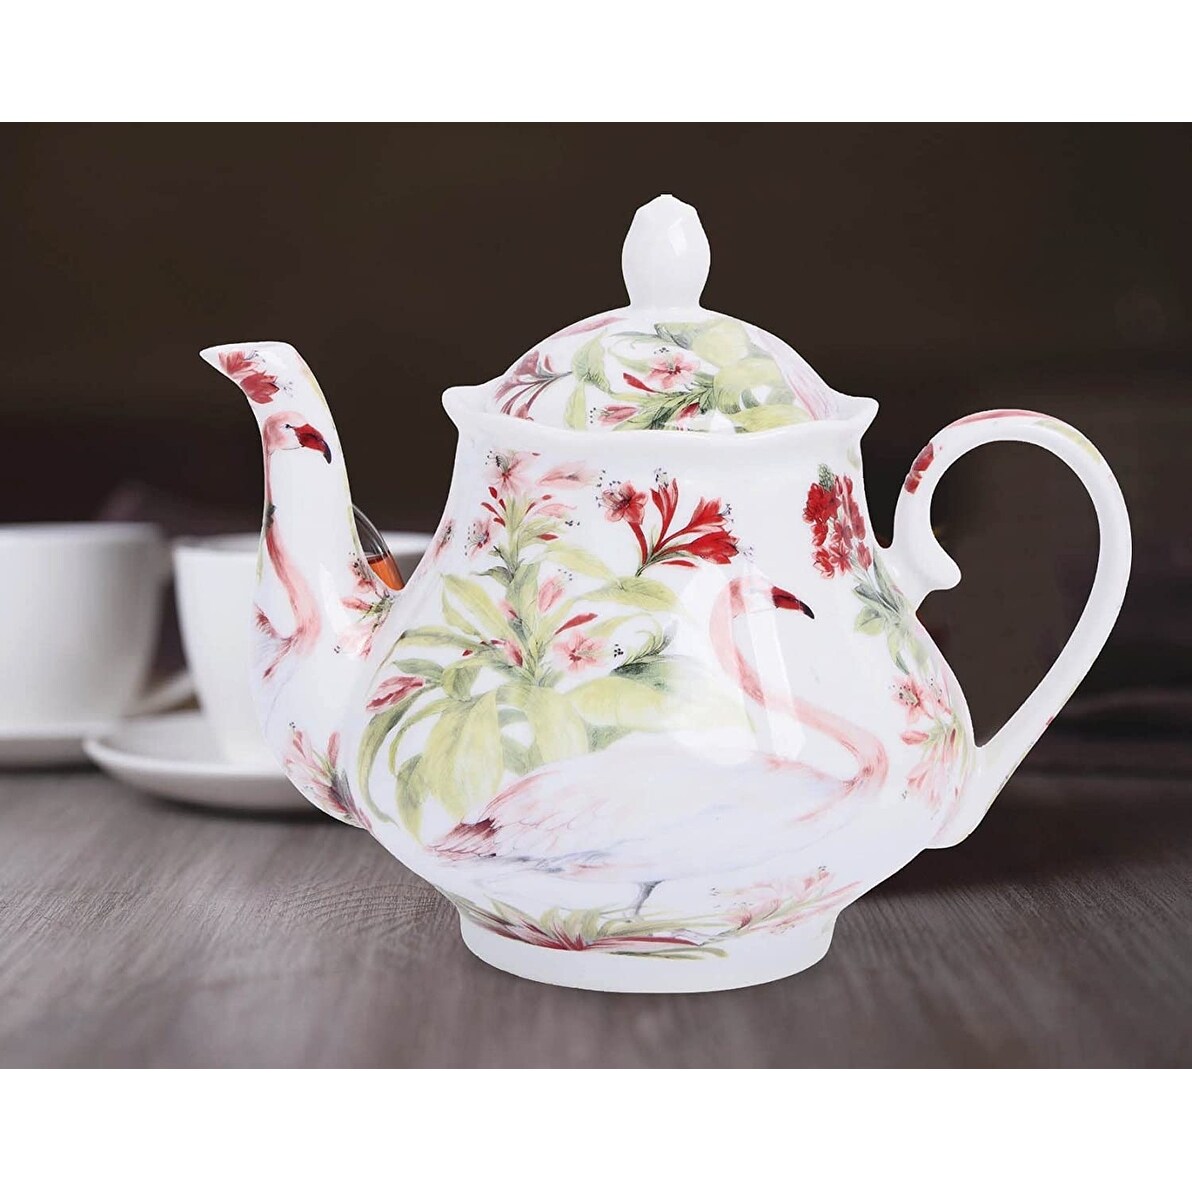 https://ak1.ostkcdn.com/images/products/is/images/direct/15714aabc61224dccf47a6abfc65e420e75505dc/European-Style-Ceramic-Teapot-Coffee-Pot-Water-Pot-Porcelain-Vintage-Gift-Tea-Pot.jpg